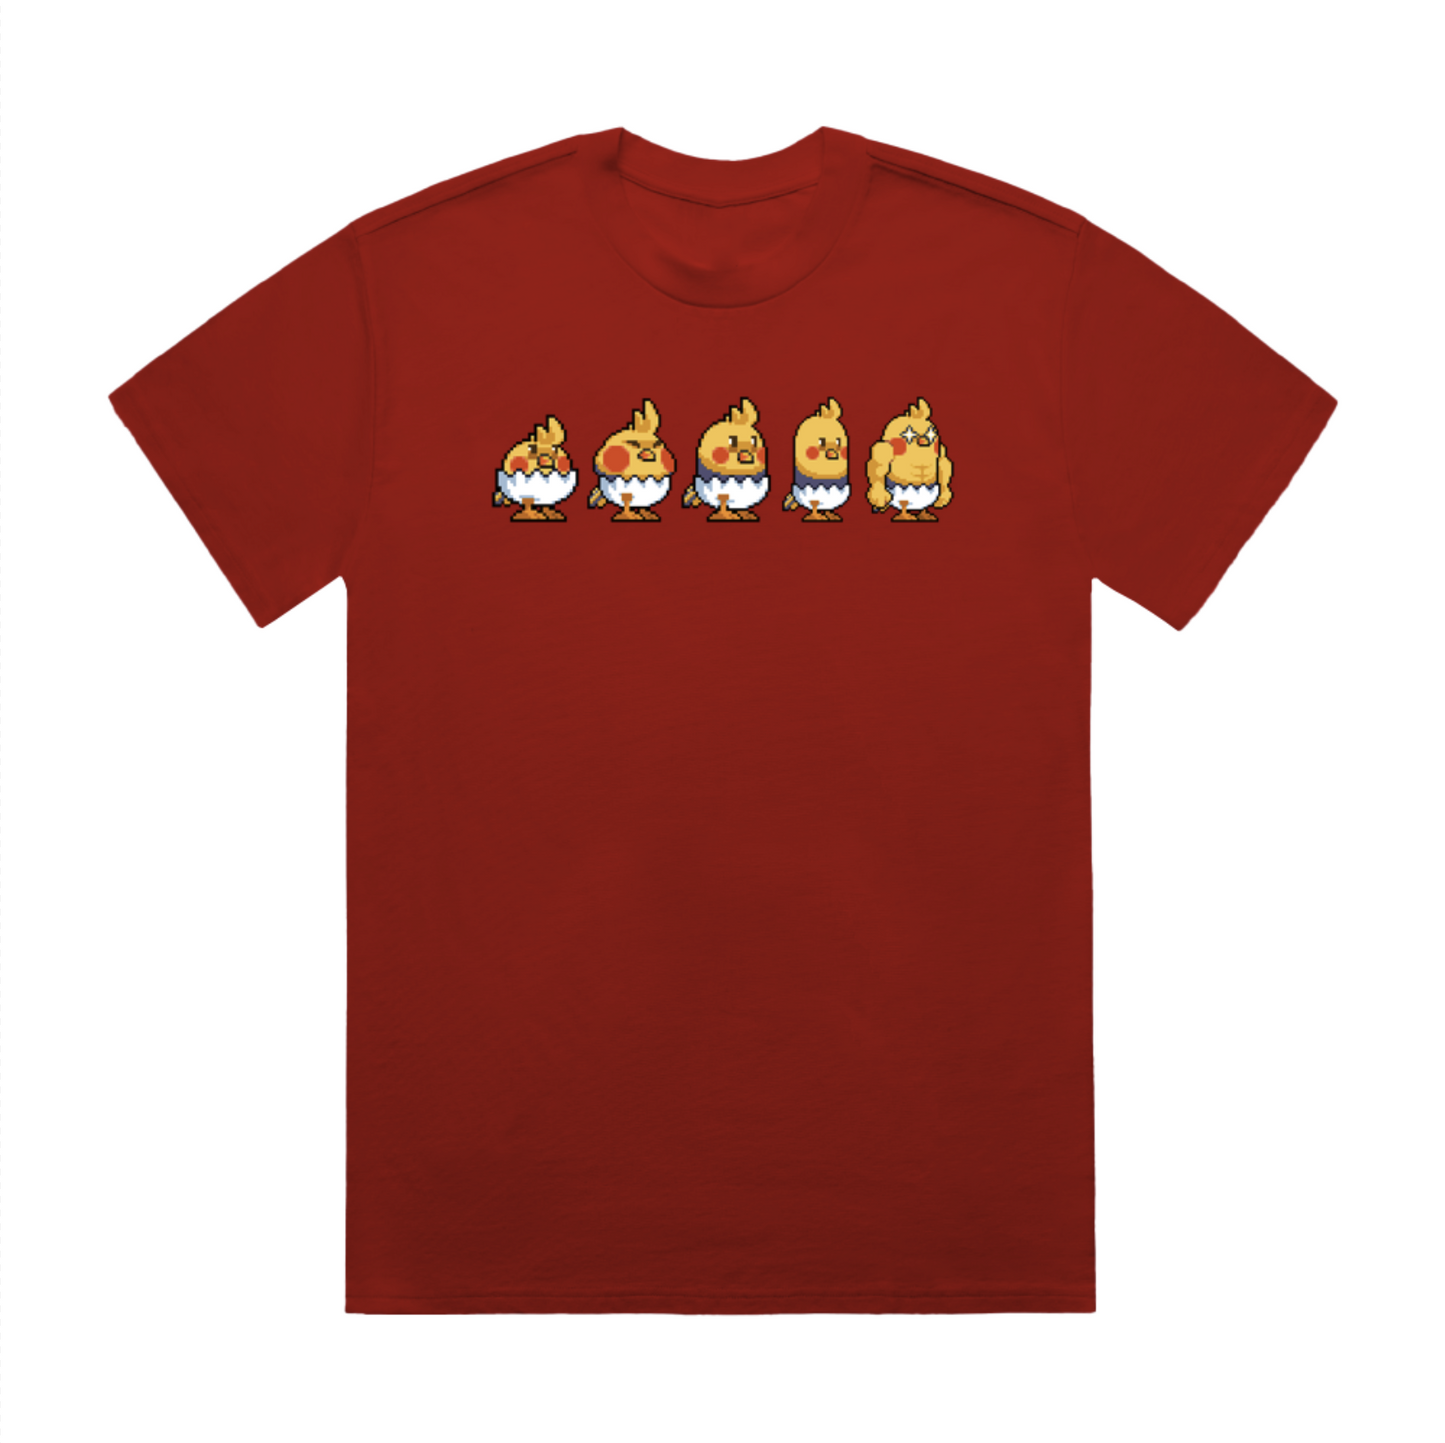 Auteru Chirplings Assemble! T-Shirt(Red)